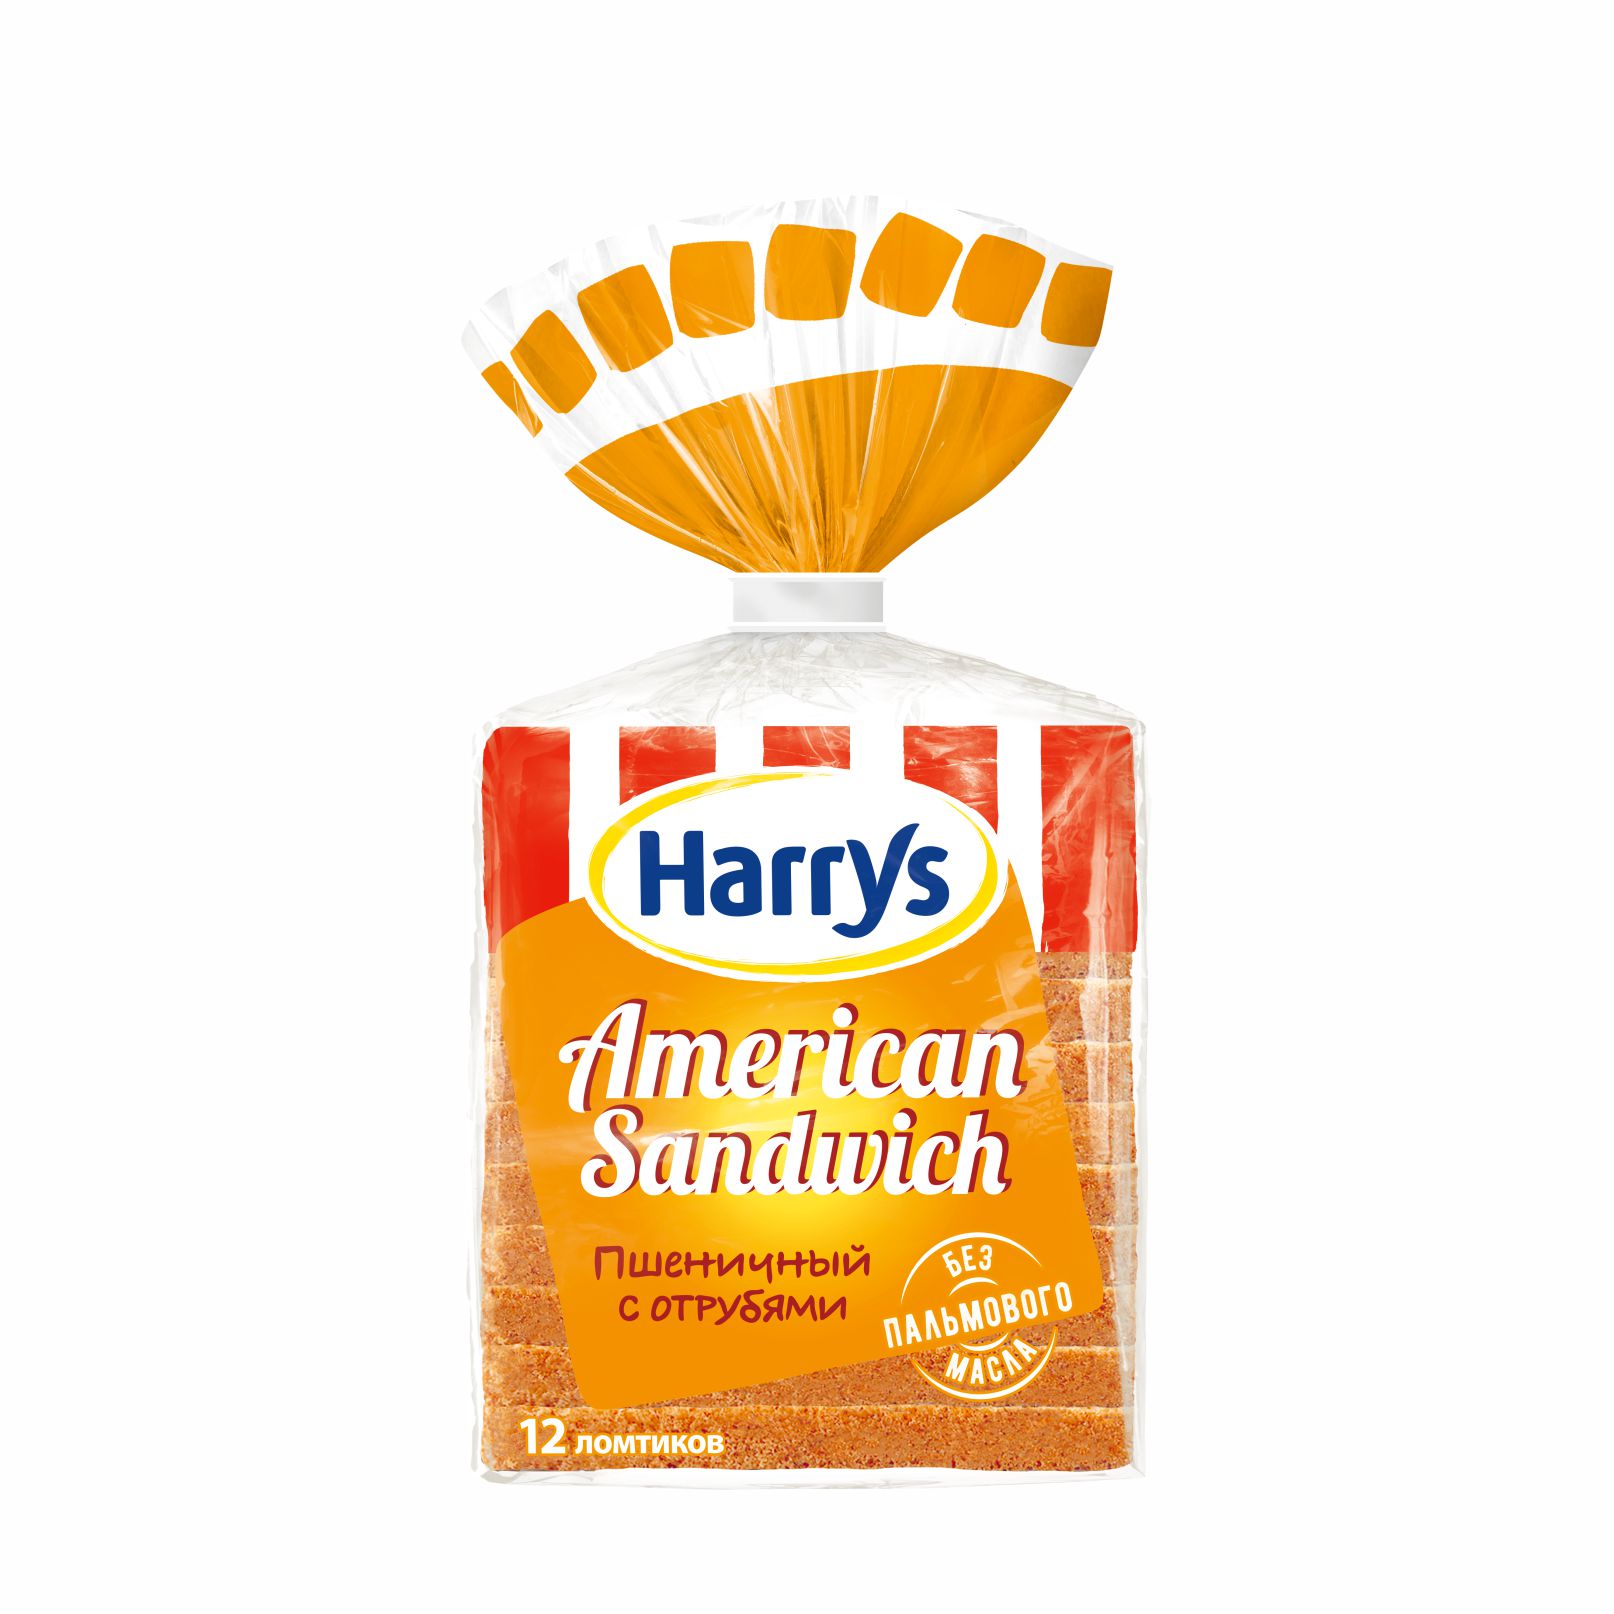 хлеб harry s american sandwich с отрубями 515 г Хлеб с отрубями Harrys American Sandwich 515 г